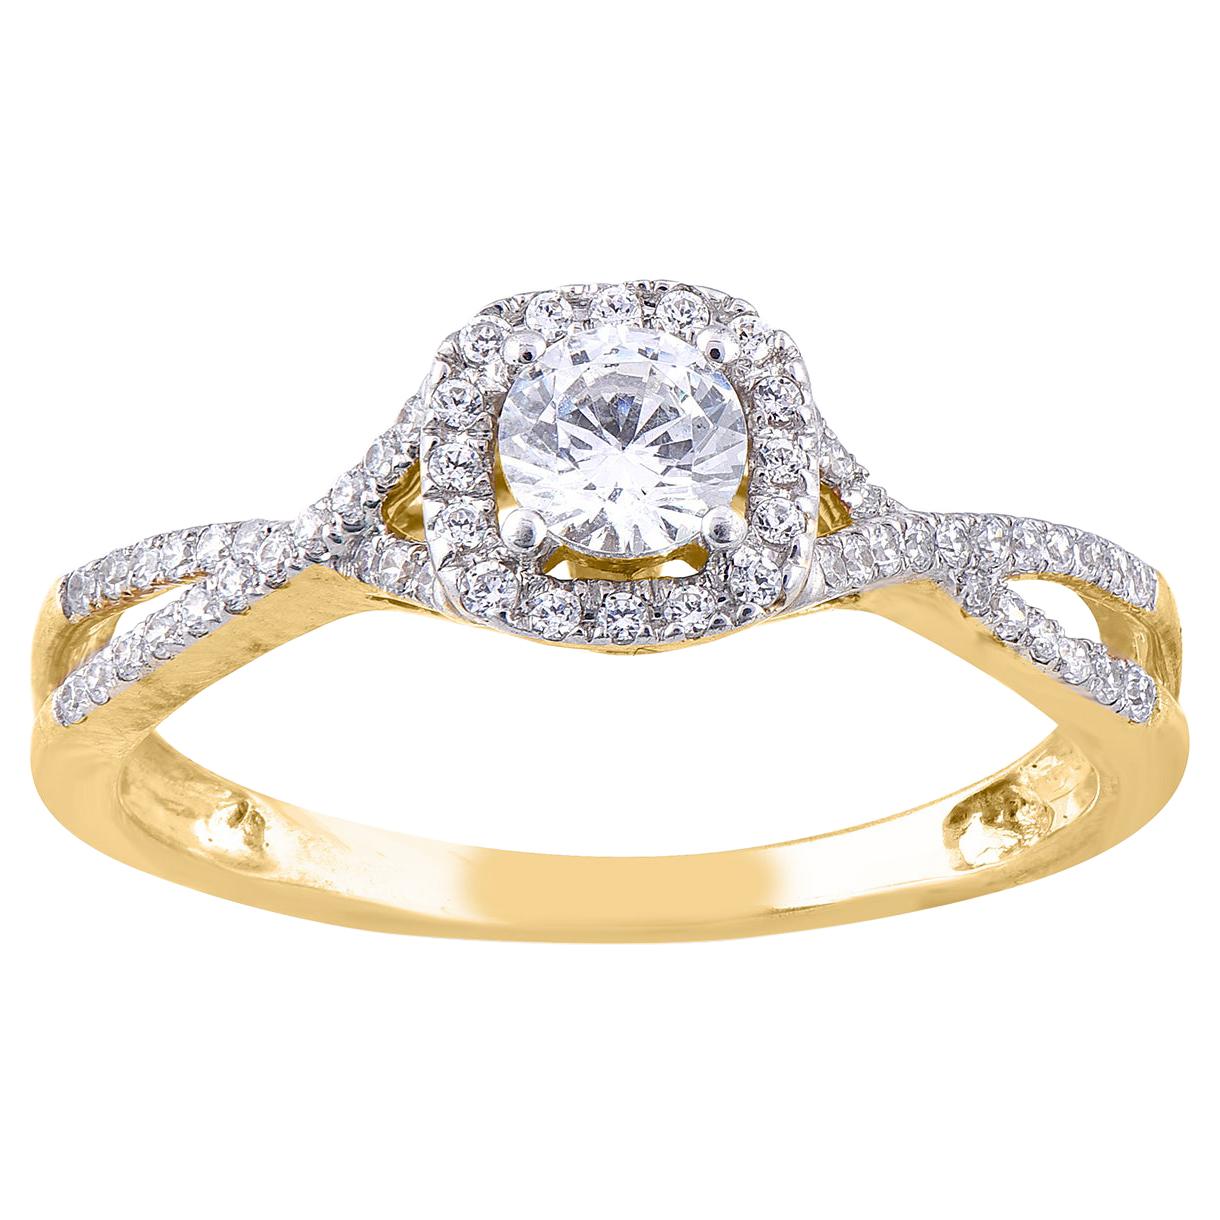 TJD Bague de fiançailles à tige torsadée en or jaune 18 carats avec diamants ronds de 0,50 carat